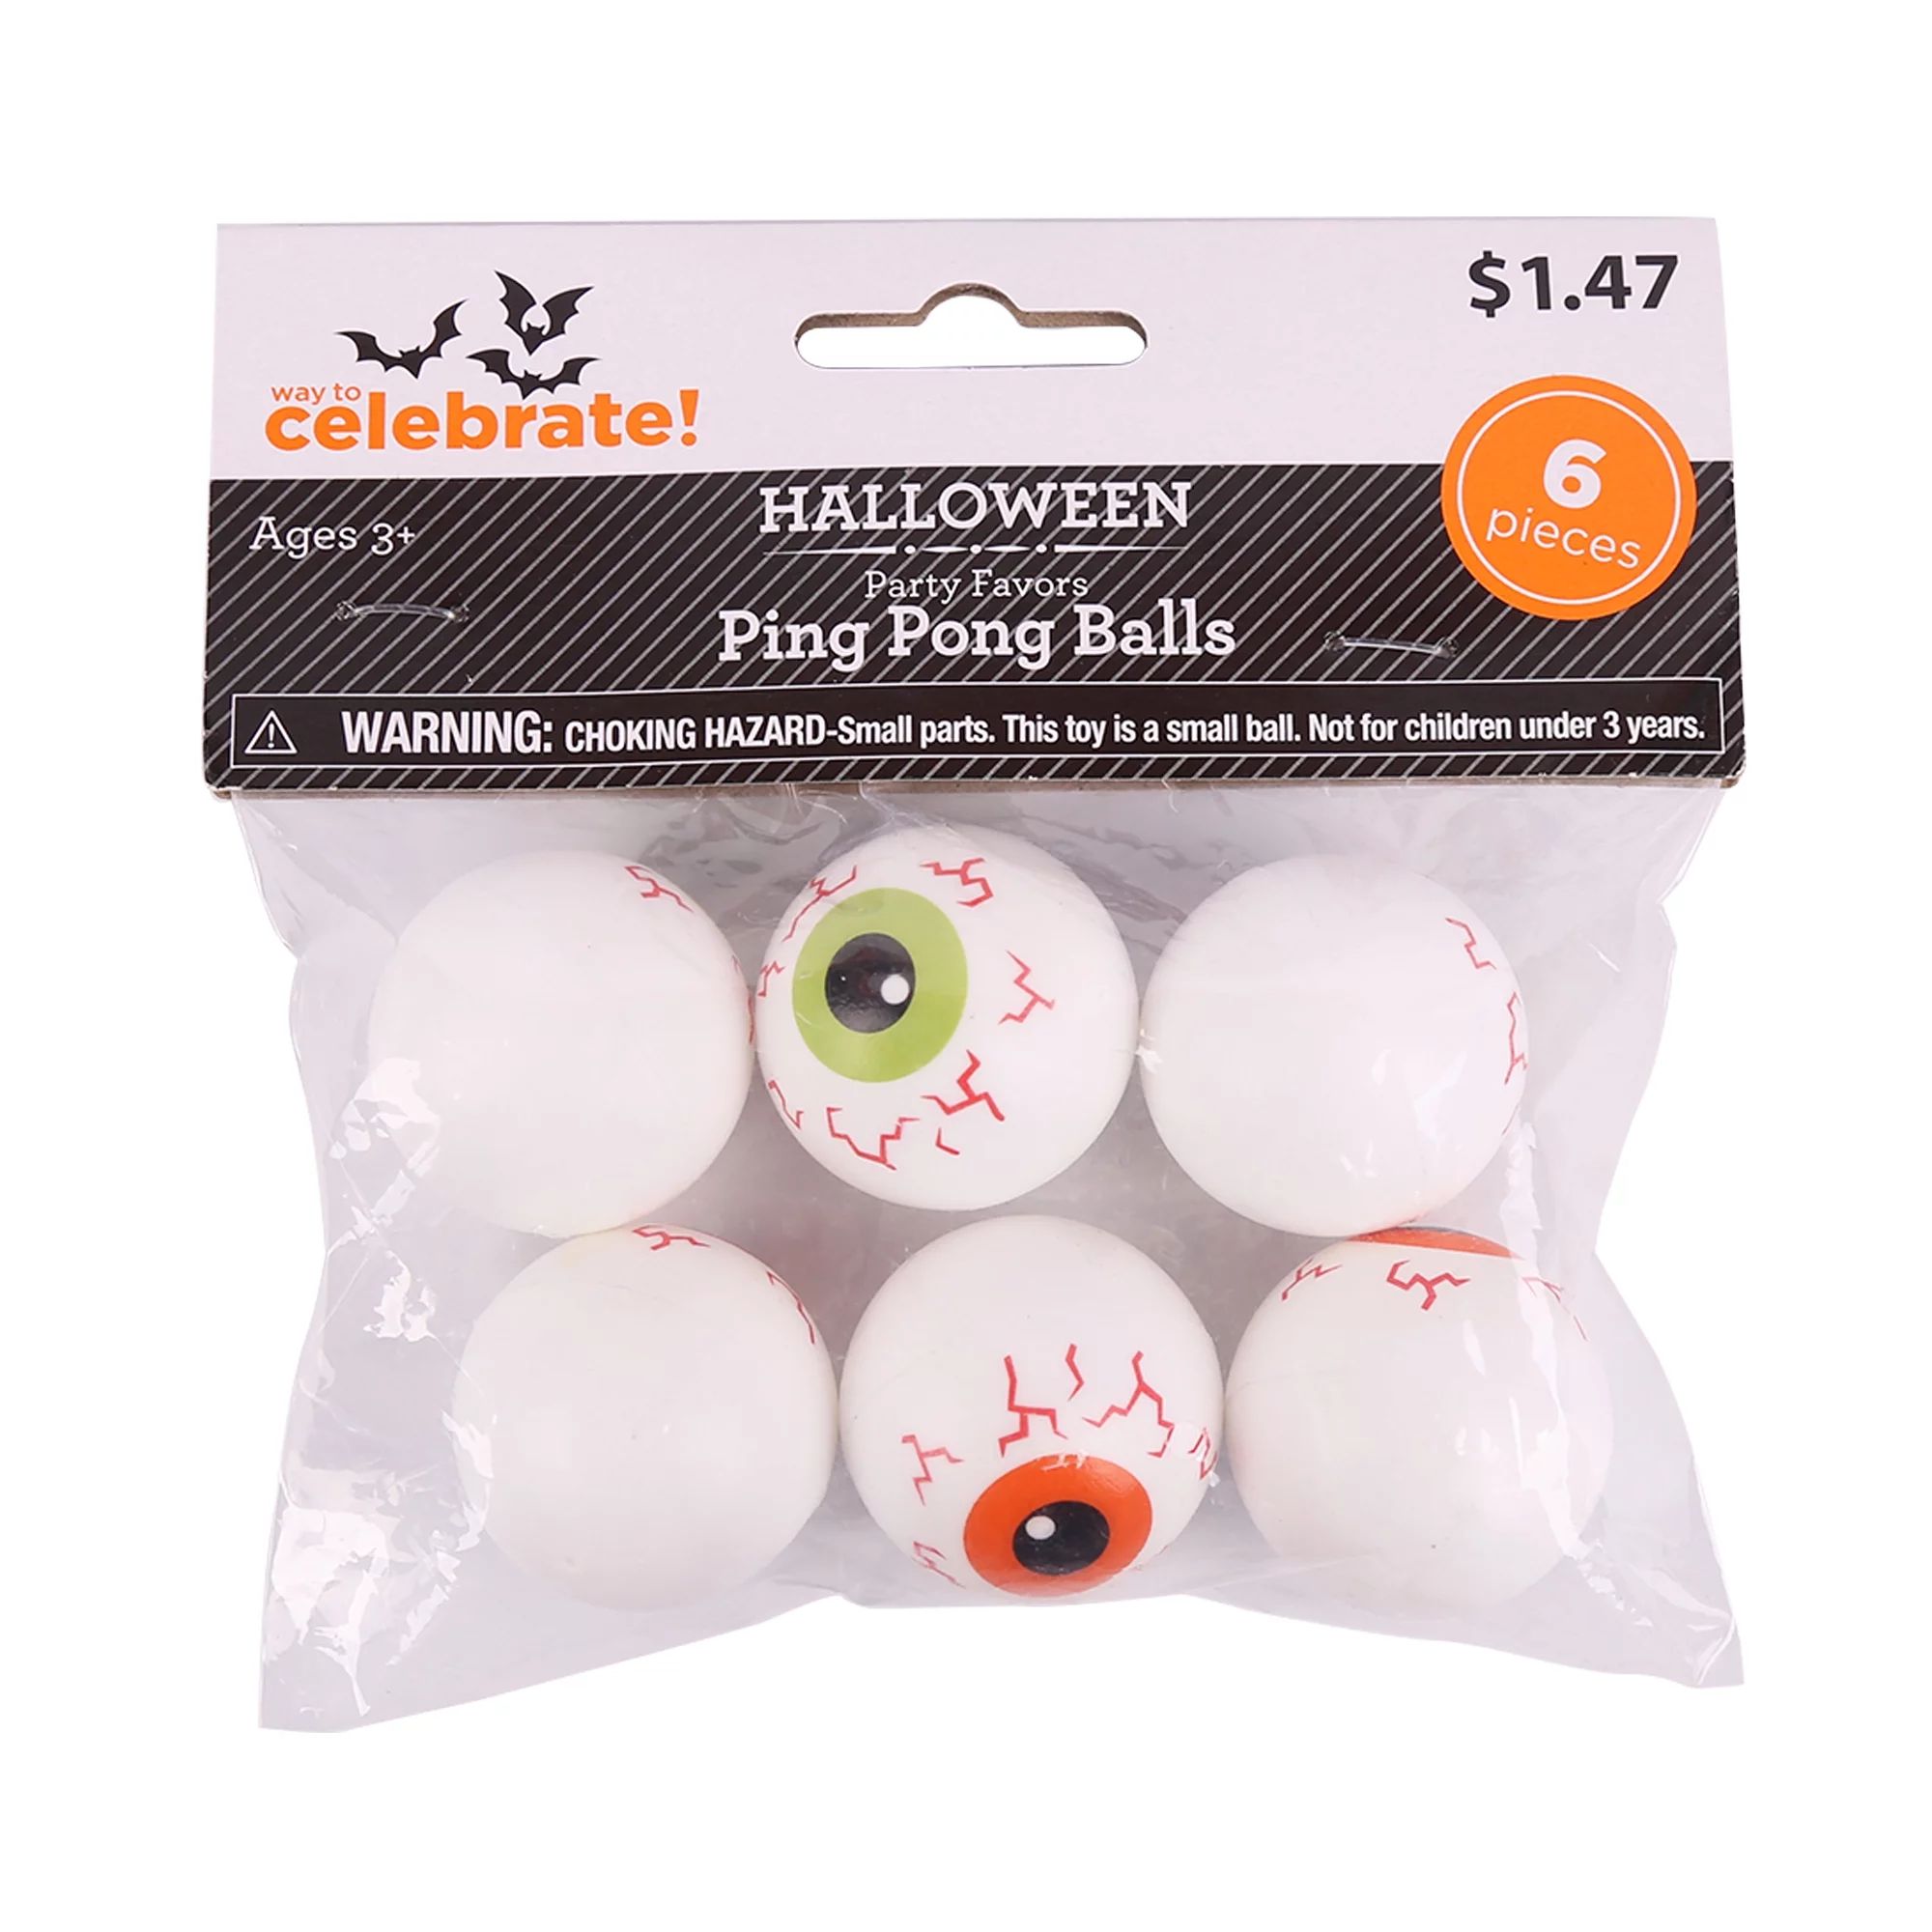 Way To Celebrate 6 Pingpong Balls Halloween Party Favors | Walmart (US)